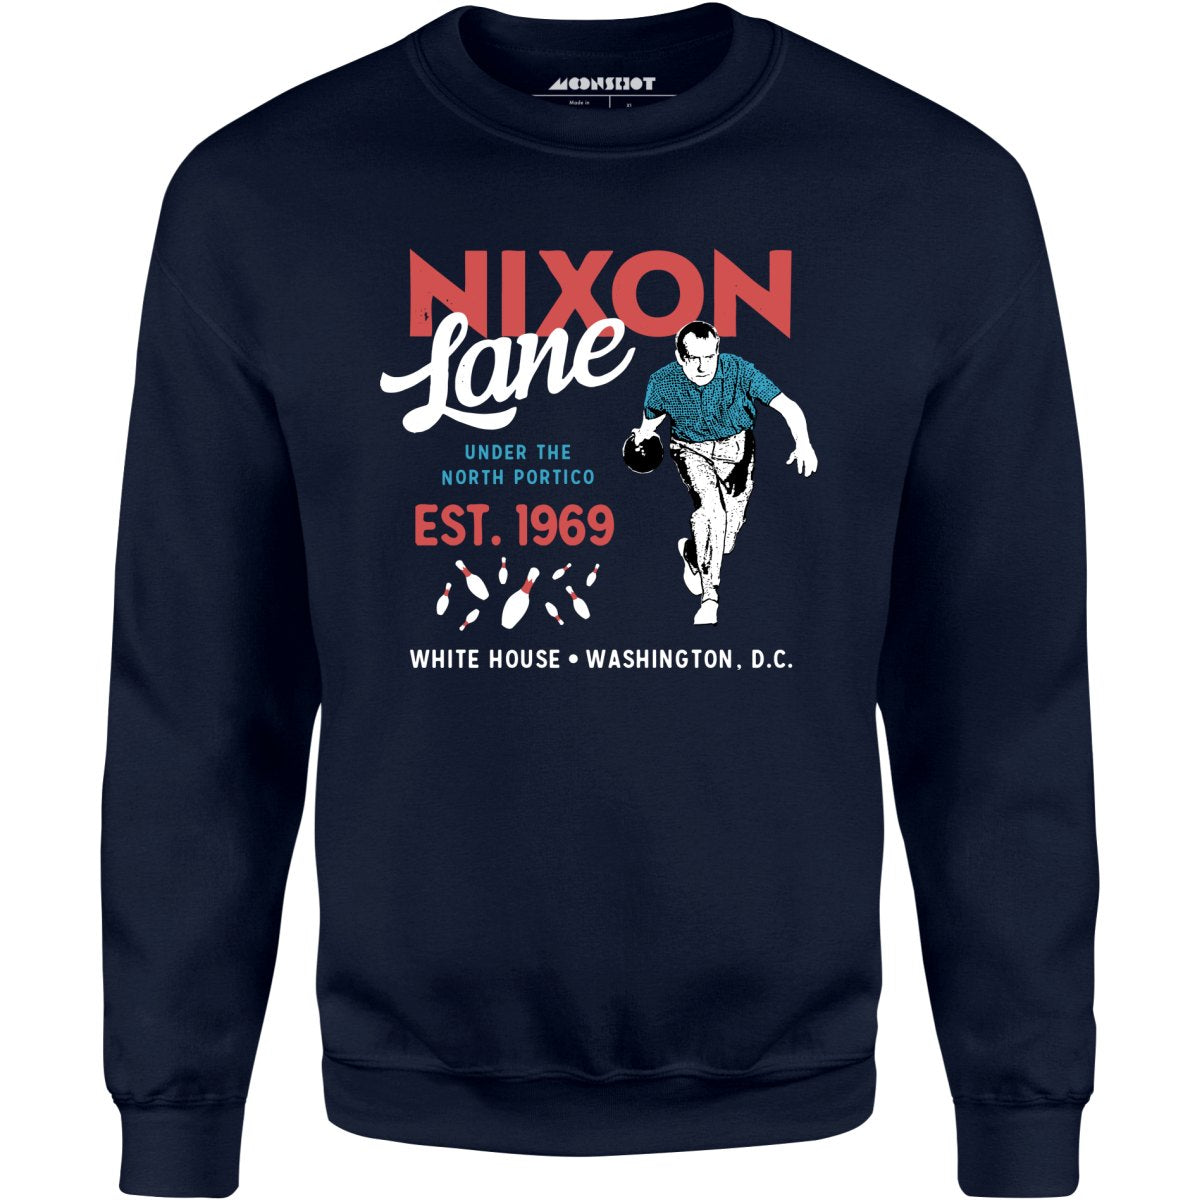 Nixon Lane - Washington D.C. - Vintage Bowling Alley - Unisex Sweatshirt